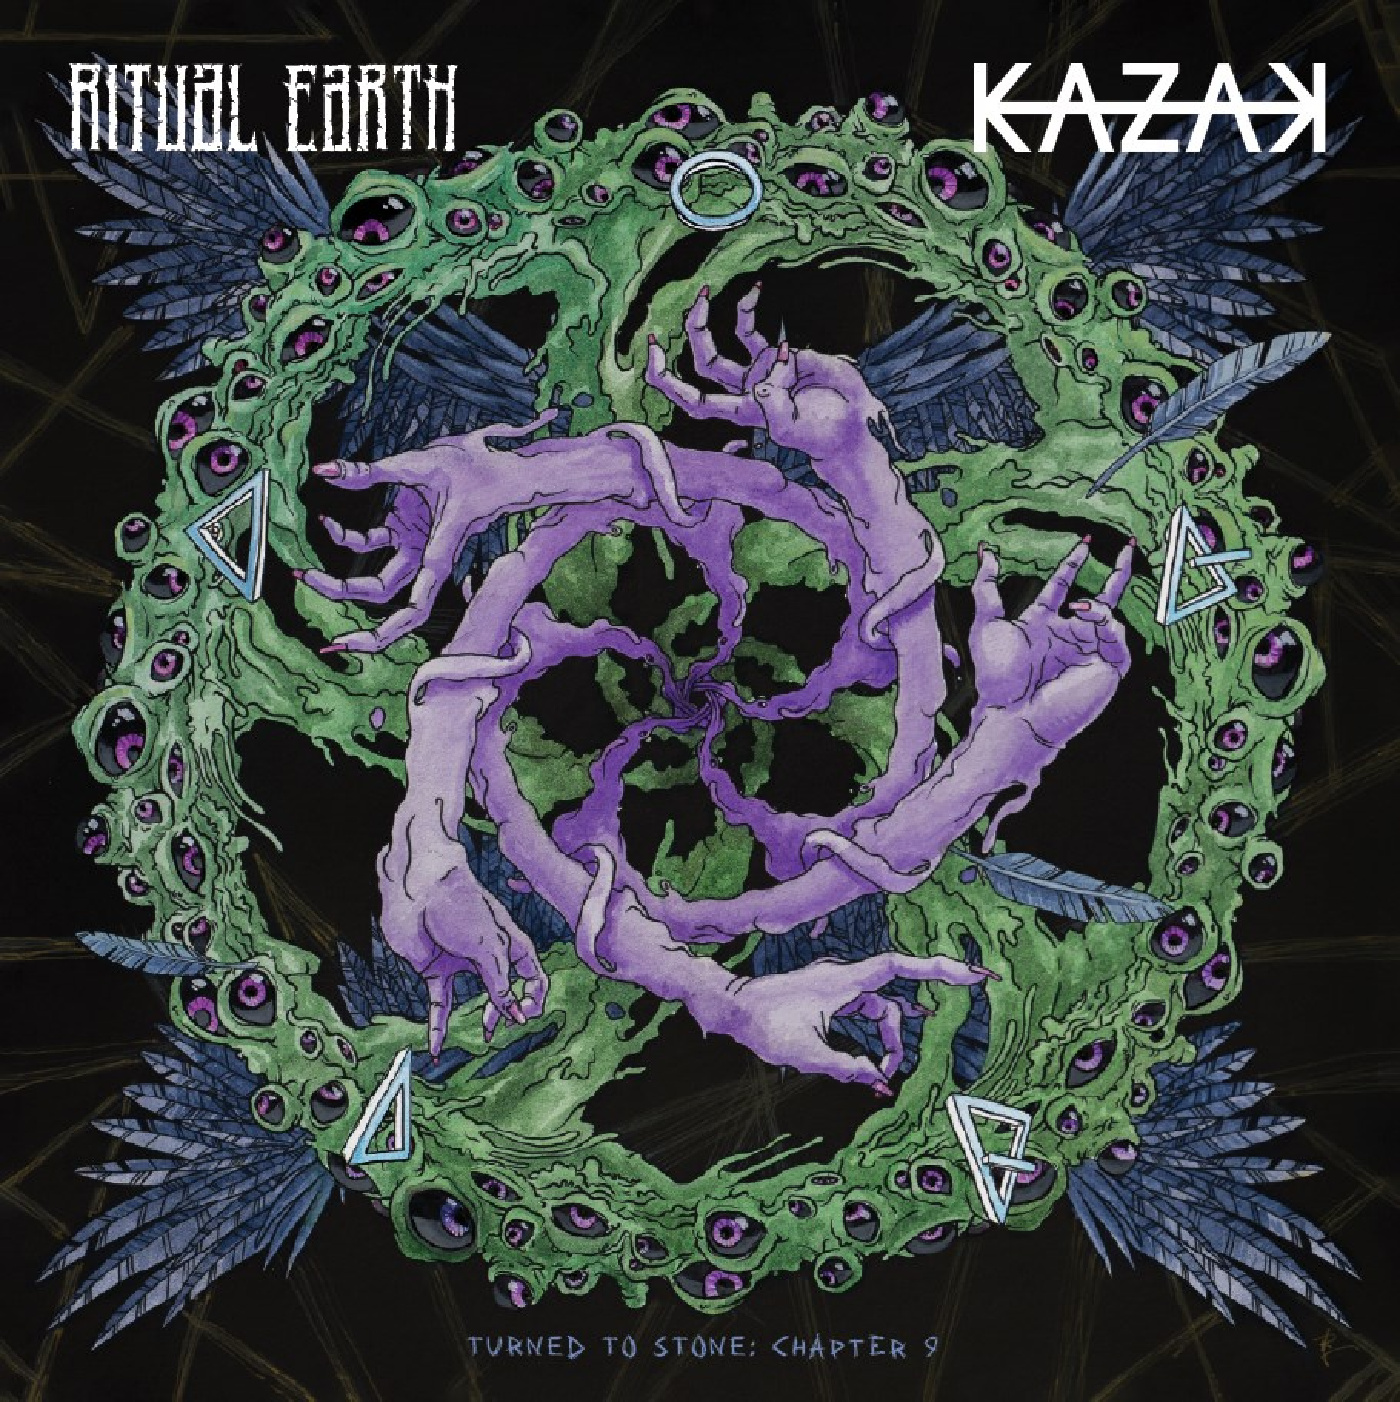 TURNED TO STONE CHAPTER 9 – Ritual Earth & Kazak